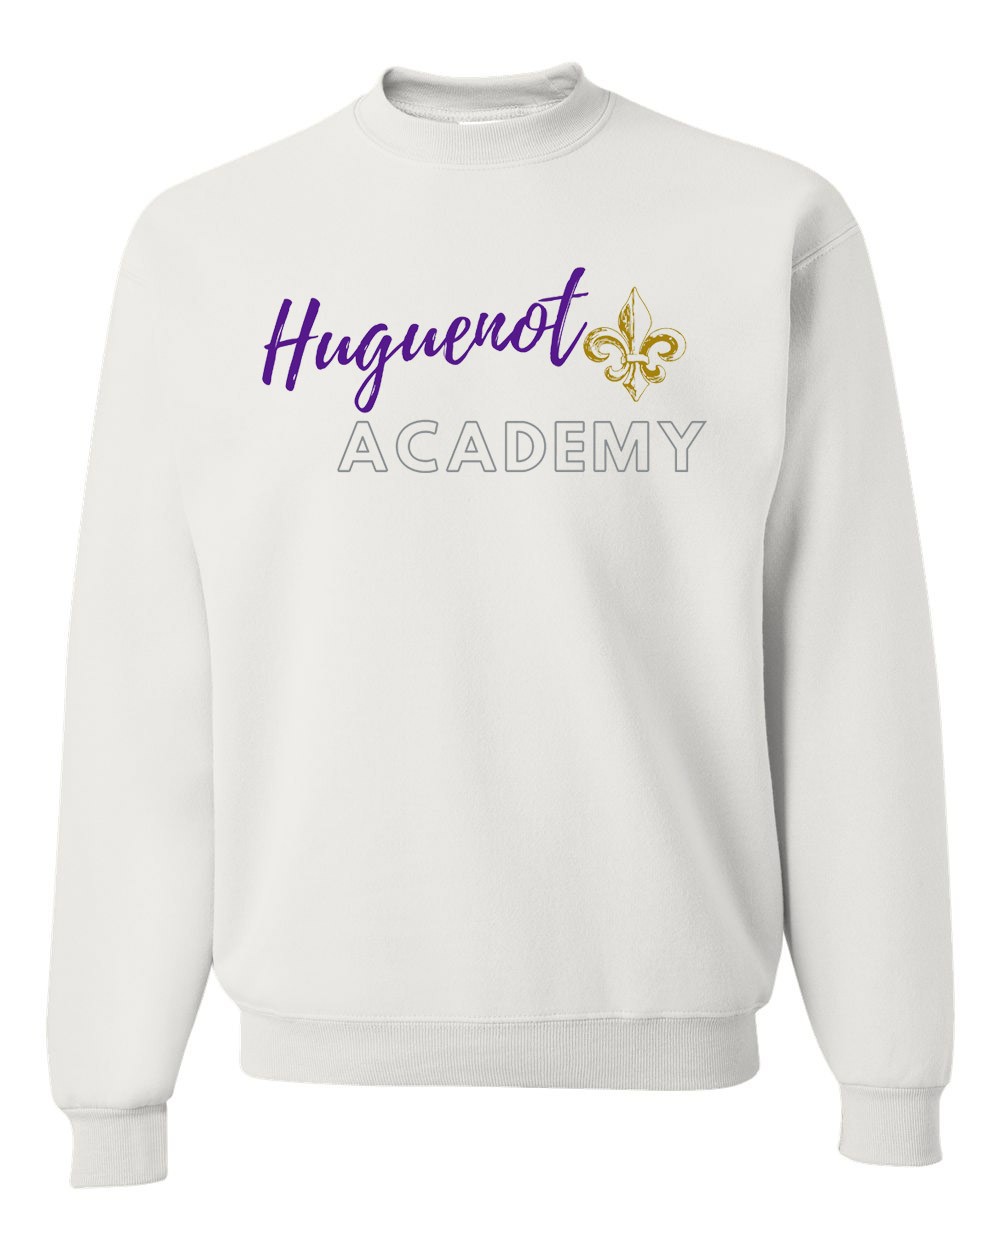 HA Spirit Sweatshirt w/ Huguenot's Logo #16-17 - Please Allow 2-3 Weeks for Fulfillment